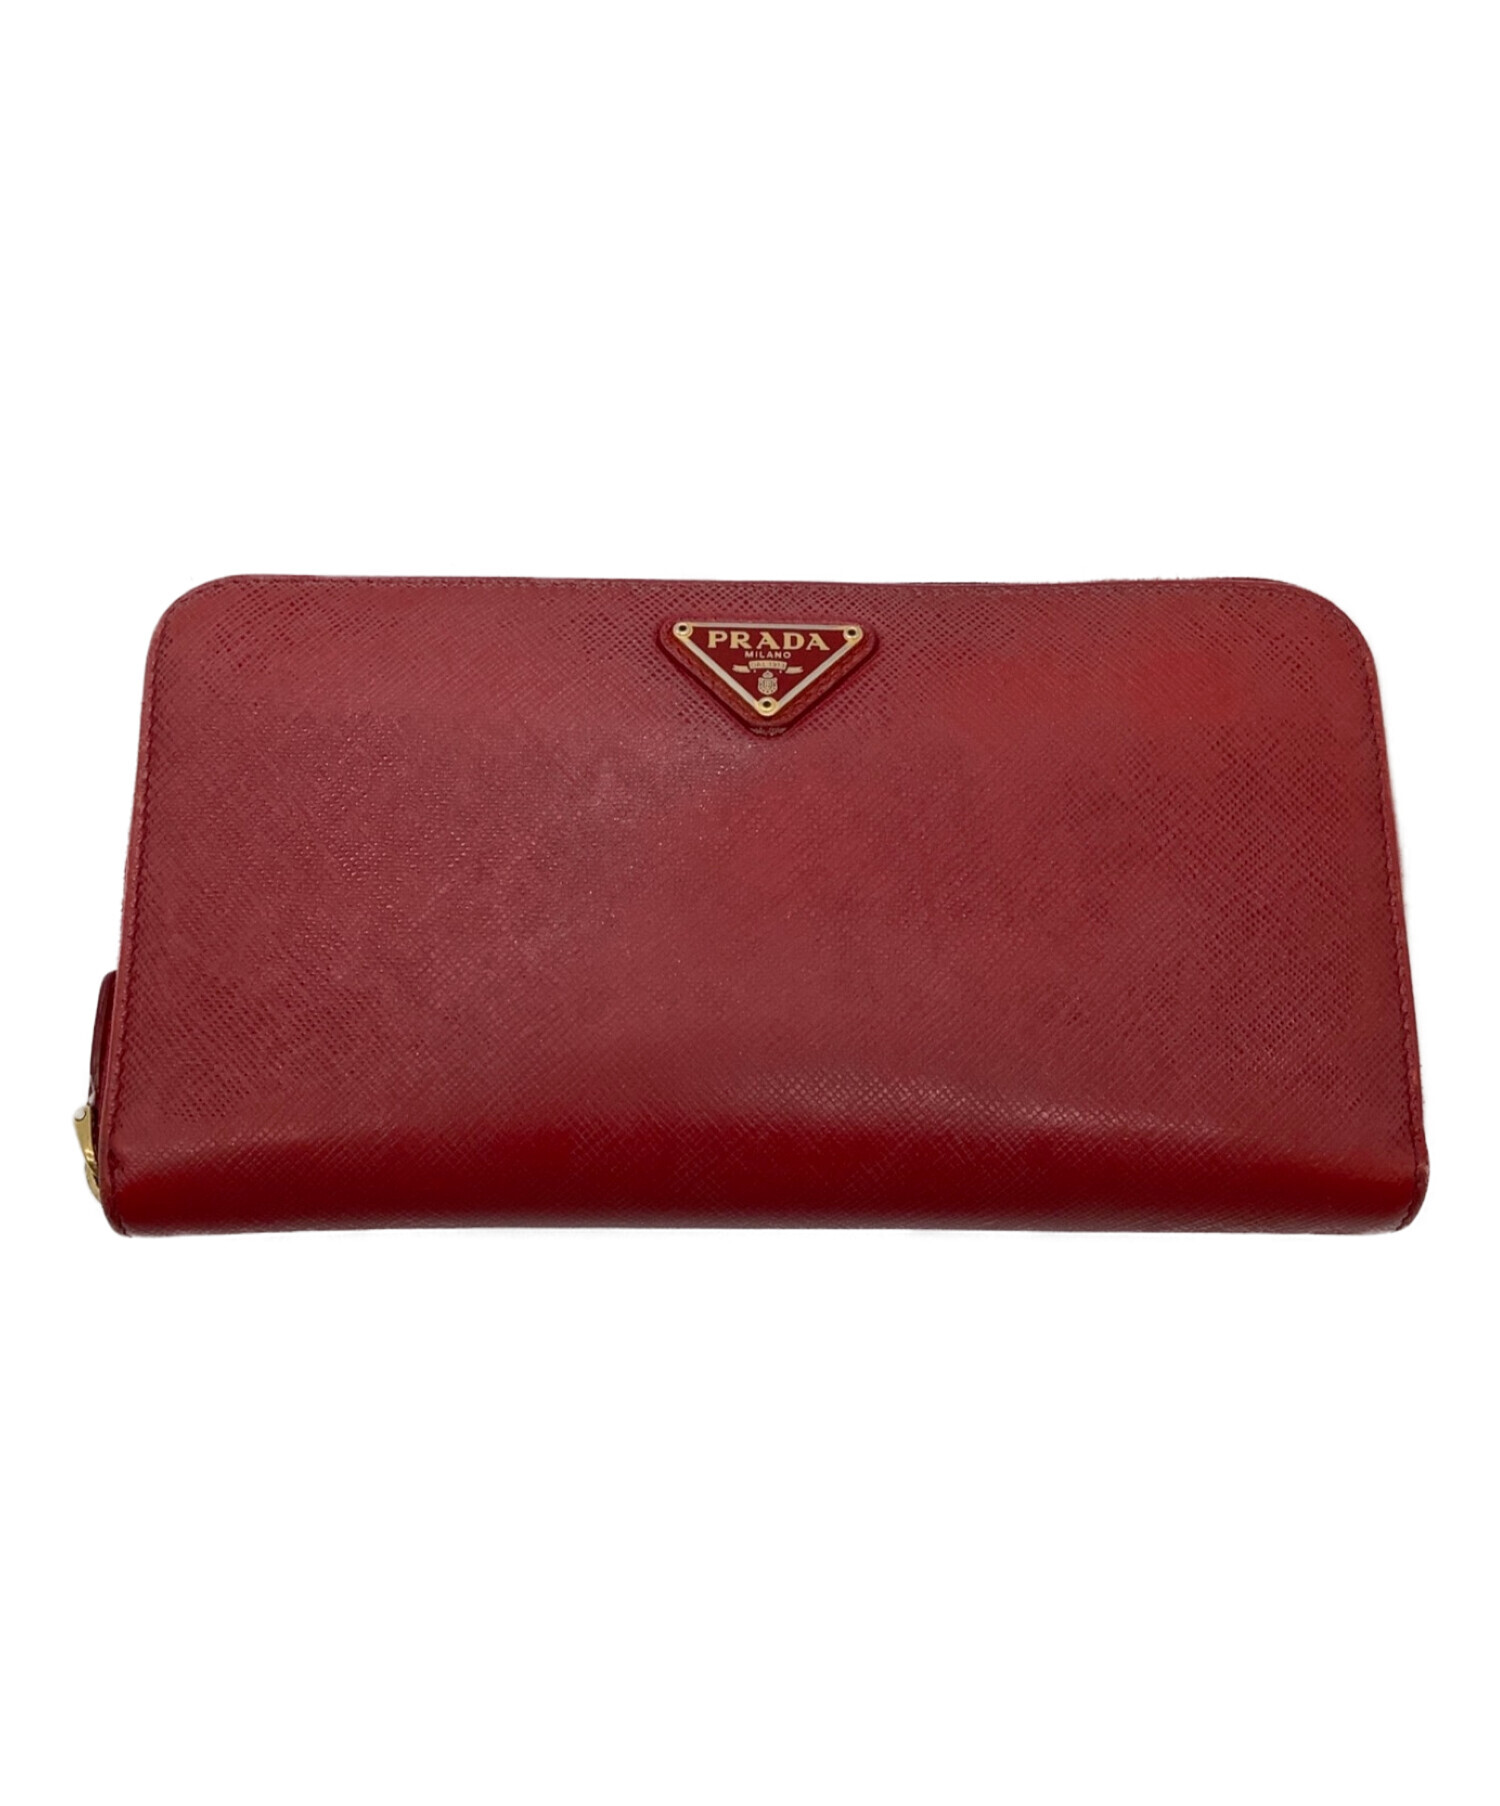 PRADA プラダ 長財布 赤色ファッション小物 - 財布